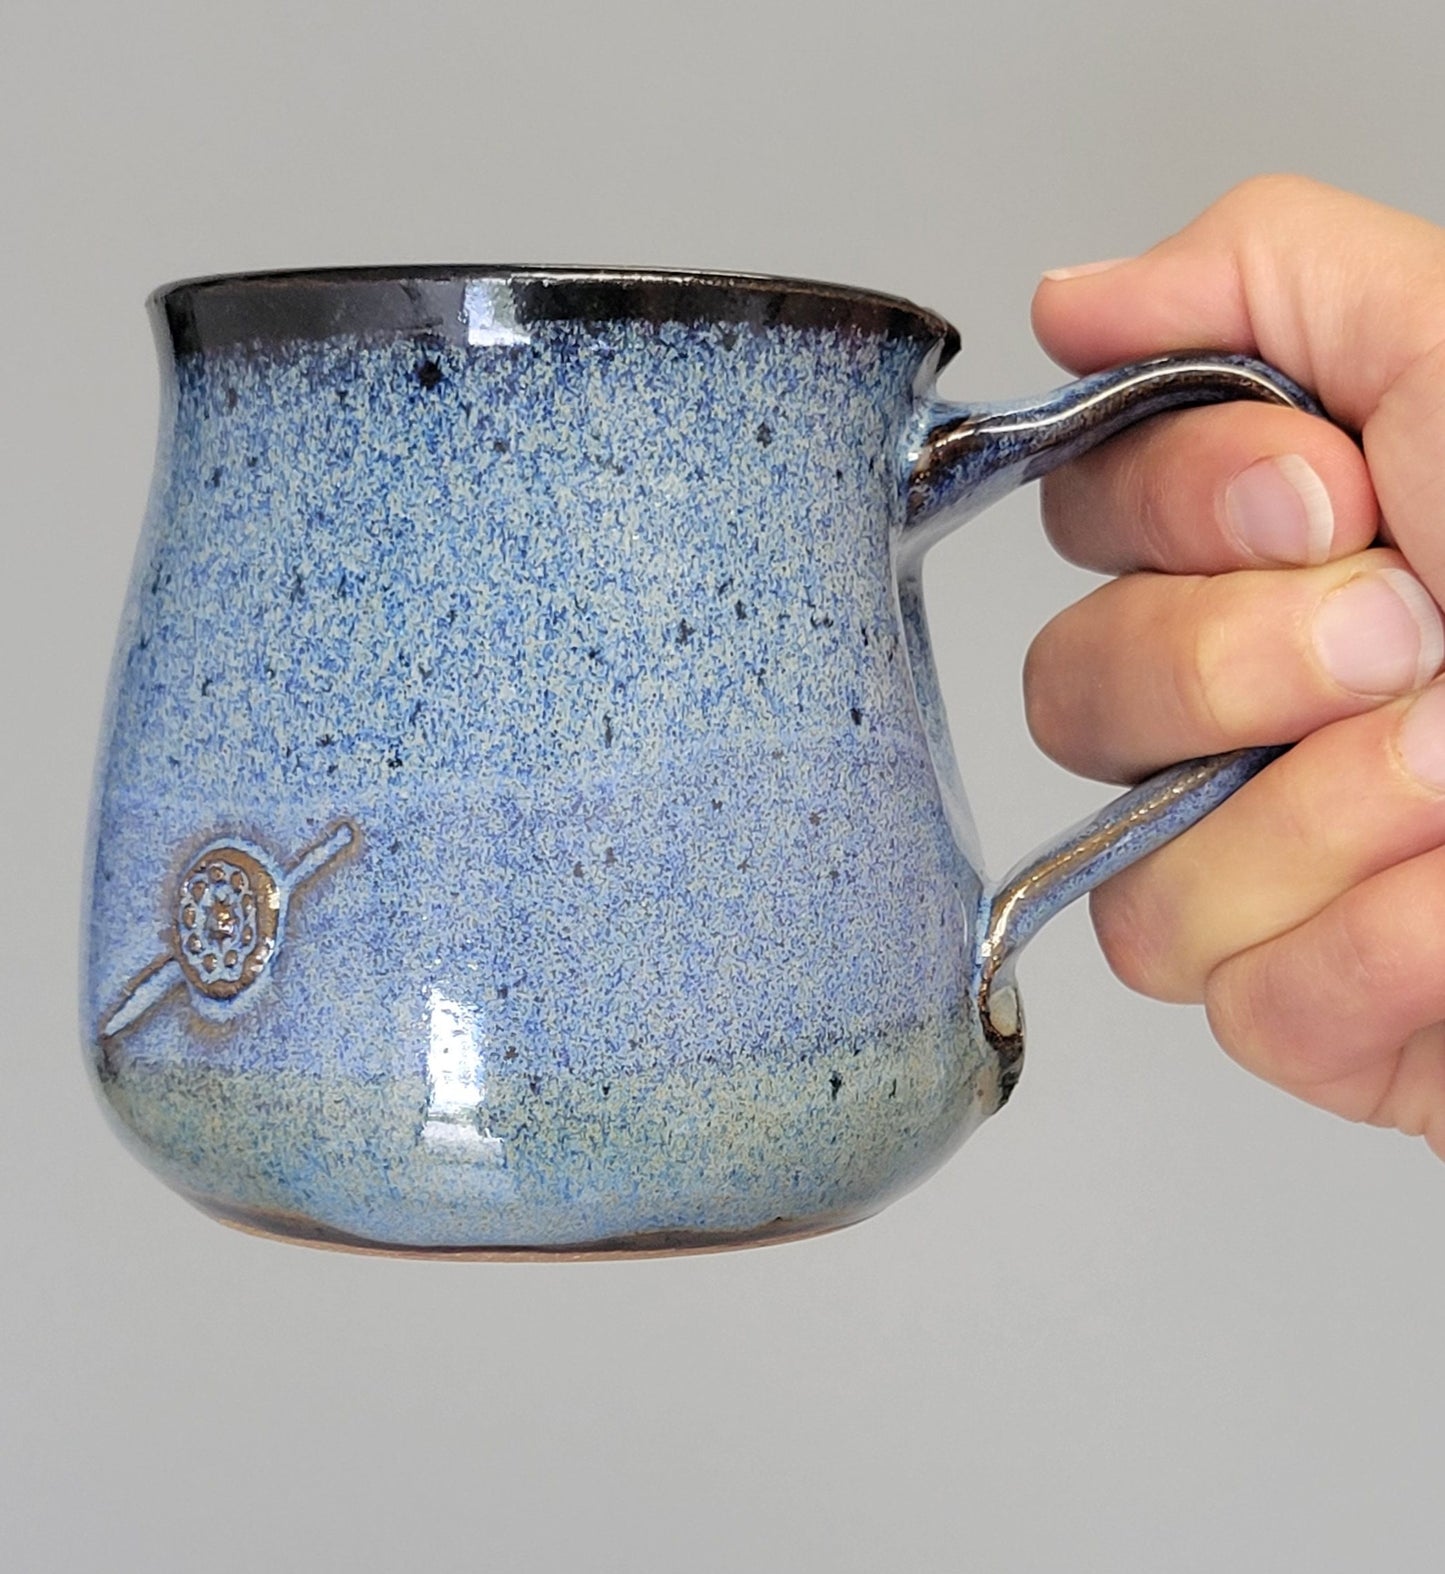 Morning Coffee Mug Cosmic Satellite Space Texture in Layered Black Blues